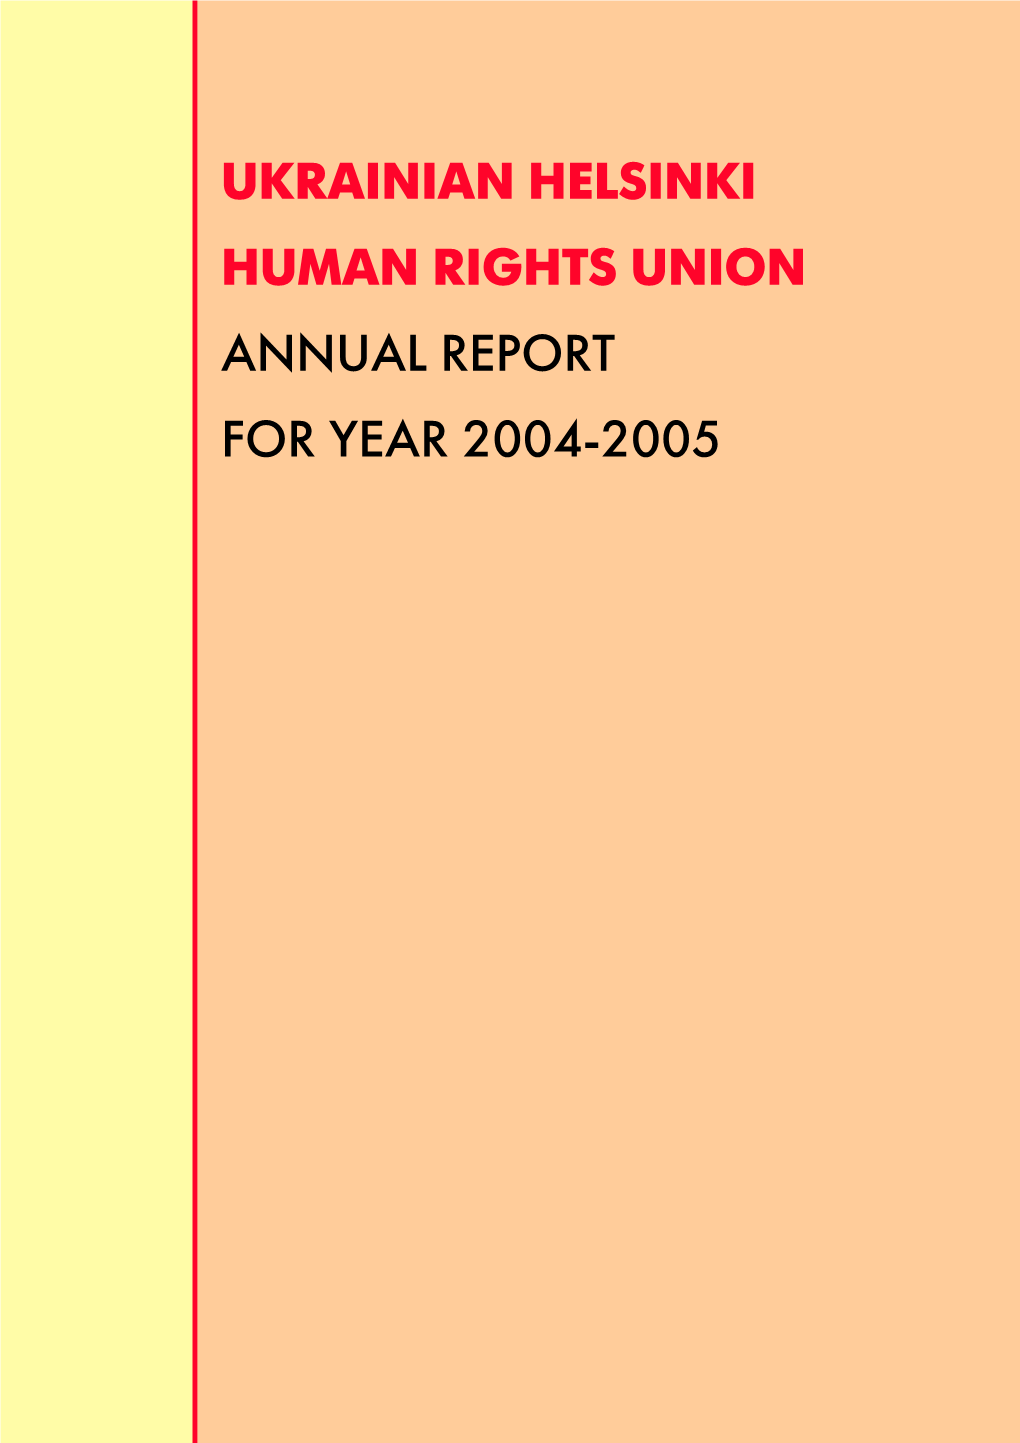 UKRAINIAN HELSINKI HUMAN RIGHTS UNION ANNUAL REPORT the History of Establishing the Organization